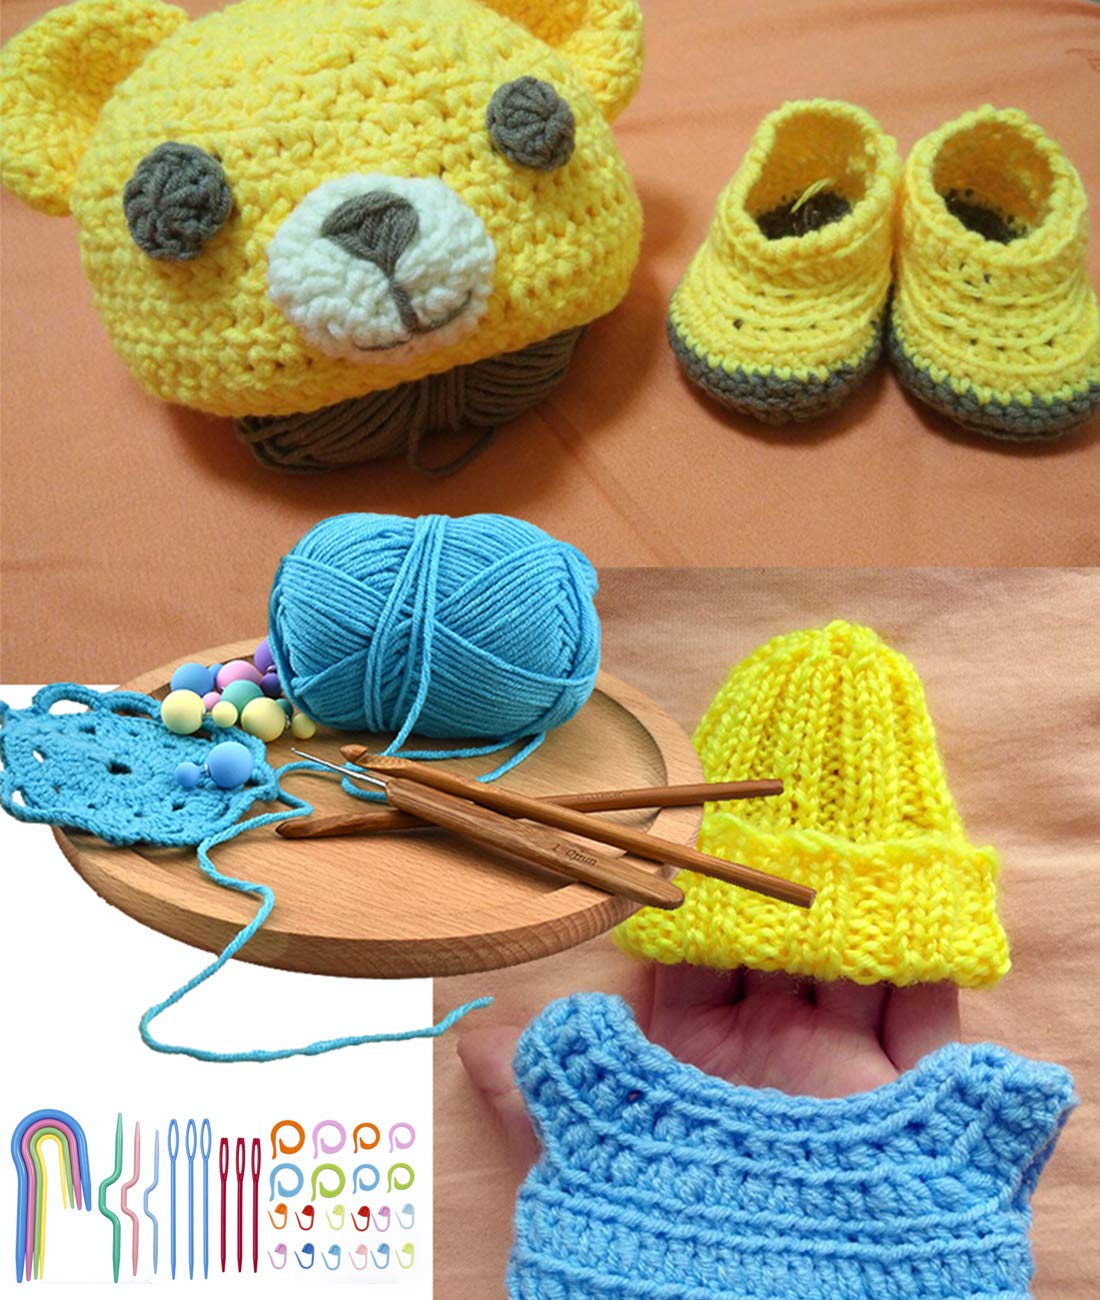 Mayboos 20 Pieces Bamboo Crochet Hooks, Knitting Needles Knit